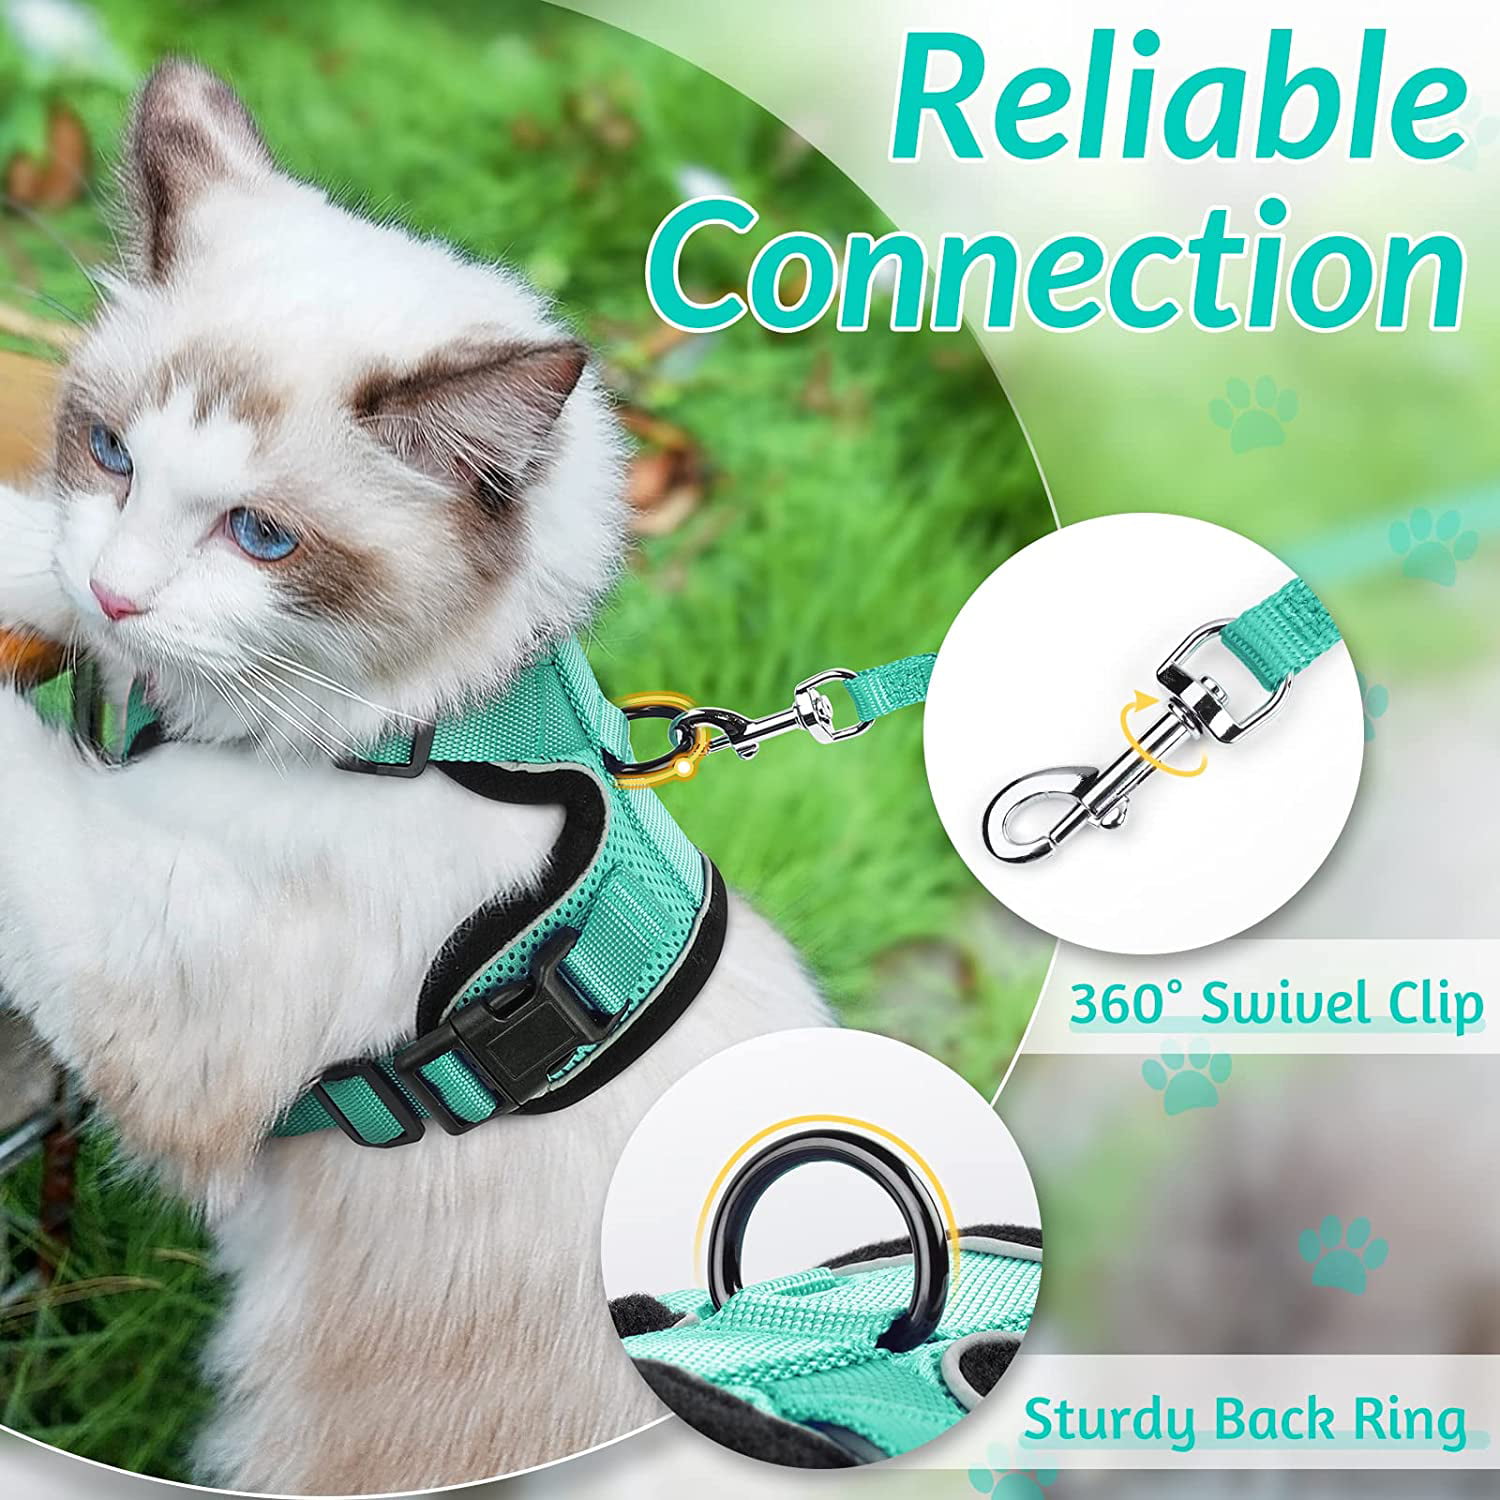 Caterpillar Rabbitgoo Cat Pet Harness And Lead Small Dog Puppy Adjustable Escape Proof Vest 